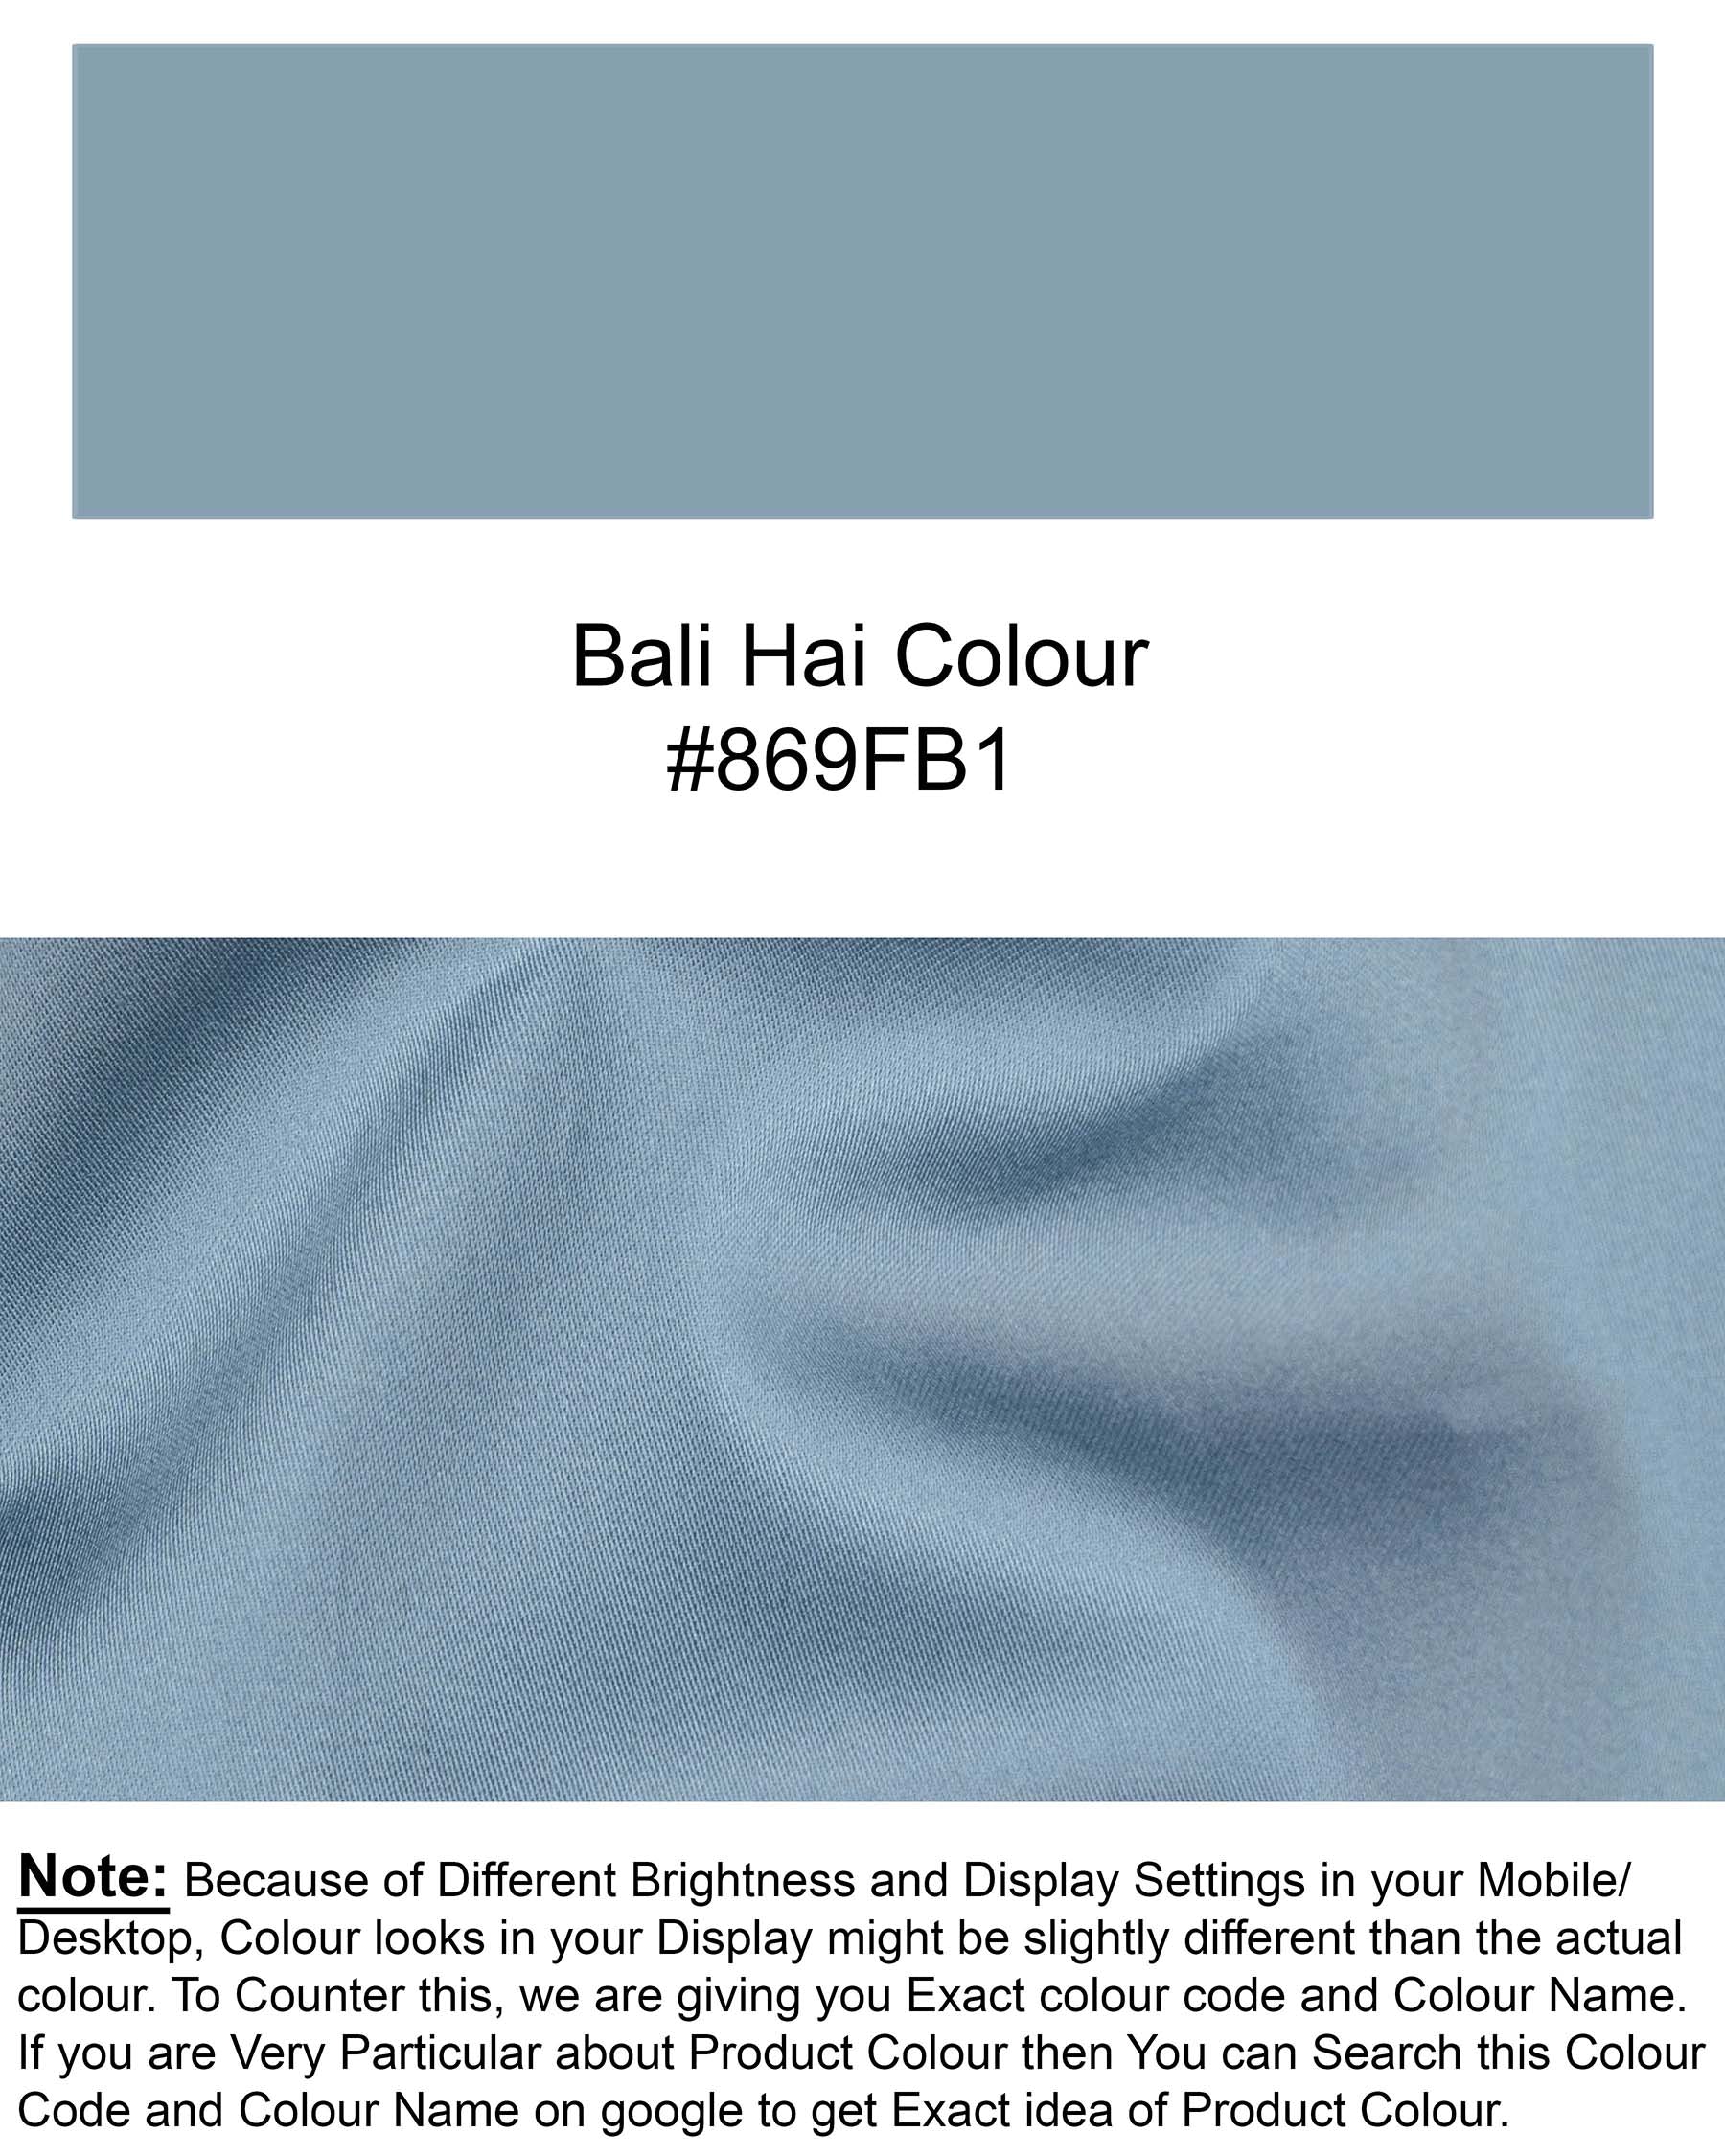 Bali Hai Blue Super Soft Premium Cotton Shirt 6167-BLK-38, 6167-BLK-H-38, 6167-BLK-39, 6167-BLK-H-39, 6167-BLK-40, 6167-BLK-H-40, 6167-BLK-42, 6167-BLK-H-42, 6167-BLK-44, 6167-BLK-H-44, 6167-BLK-46, 6167-BLK-H-46, 6167-BLK-48, 6167-BLK-H-48, 6167-BLK-50, 6167-BLK-H-50, 6167-BLK-52, 6167-BLK-H-52